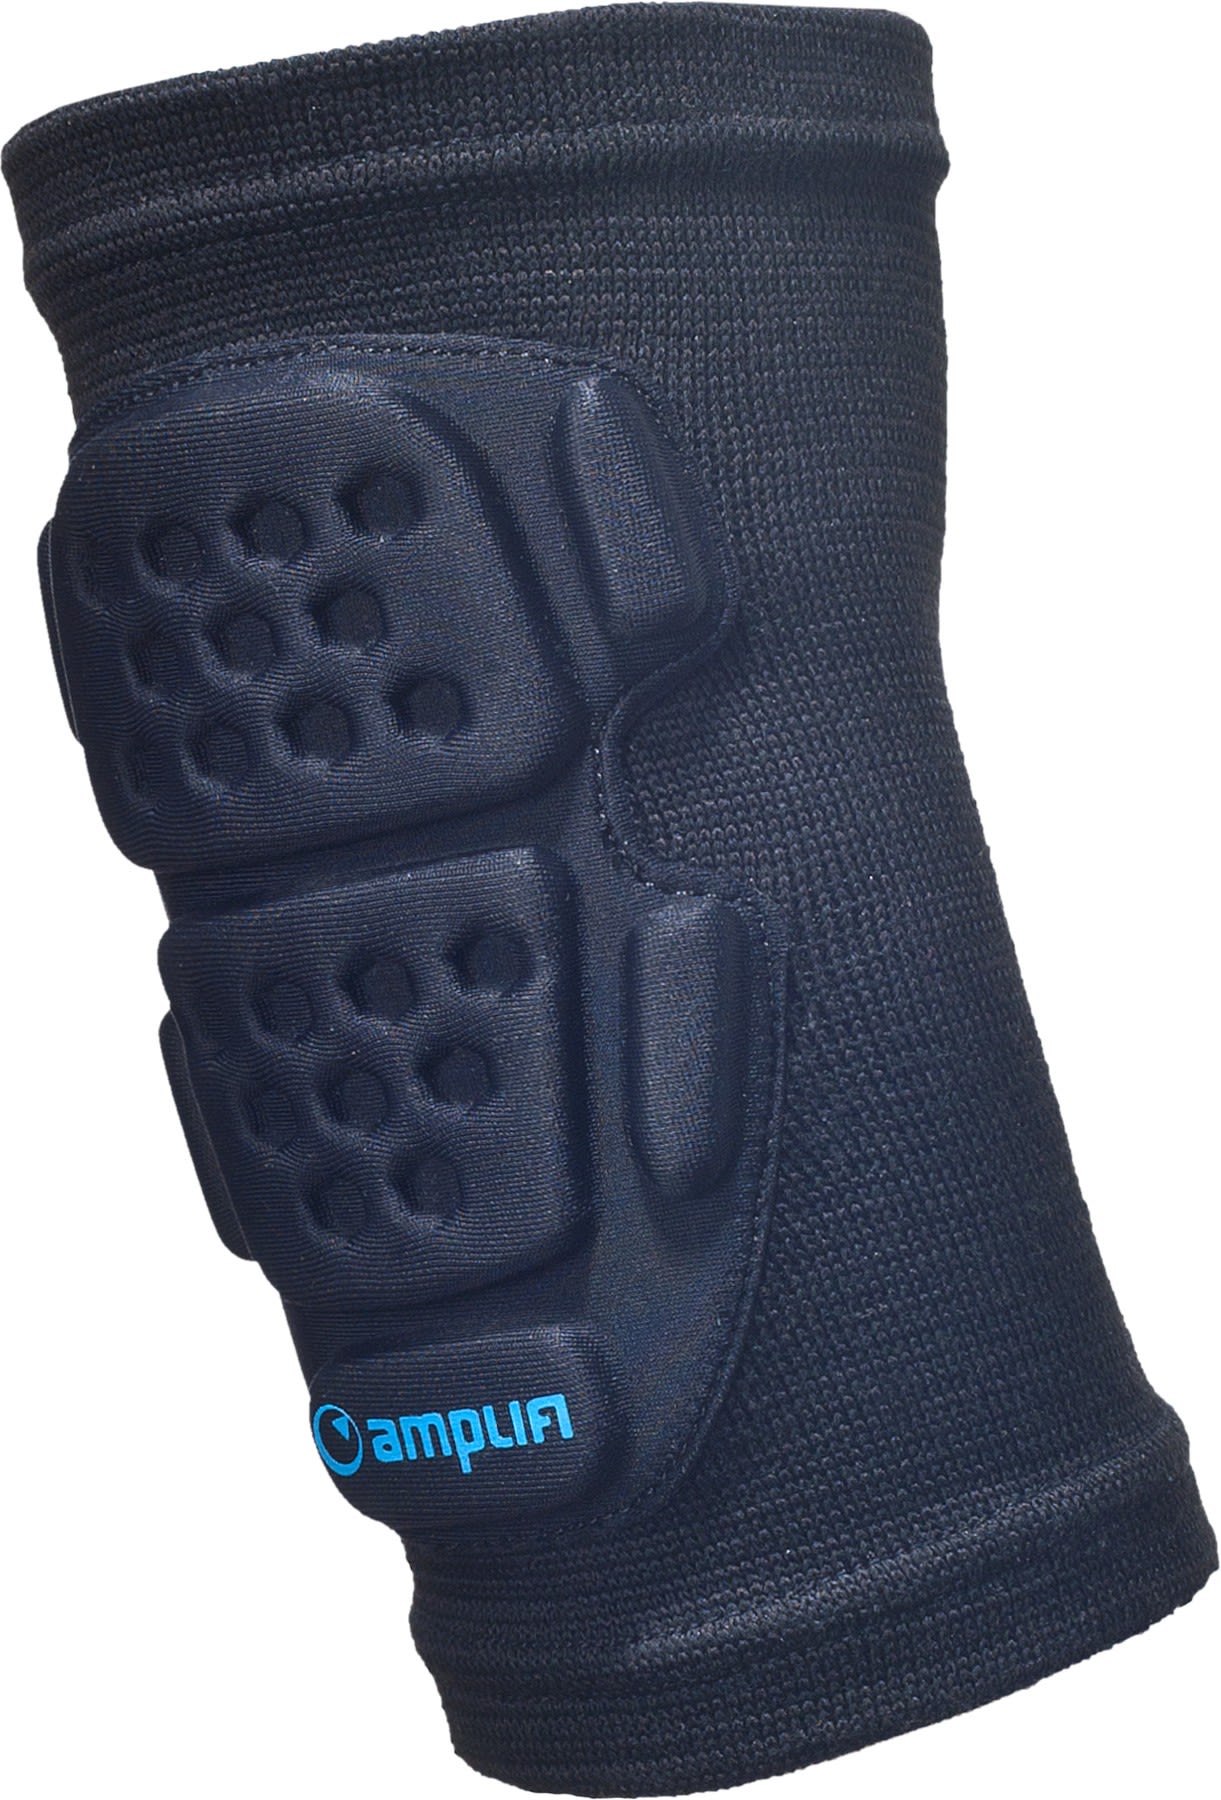 Amplifi Knee Sleeve Grom Schwarz- Knieprotektoren- Grsse XS - Farbe Black unter Amplifi